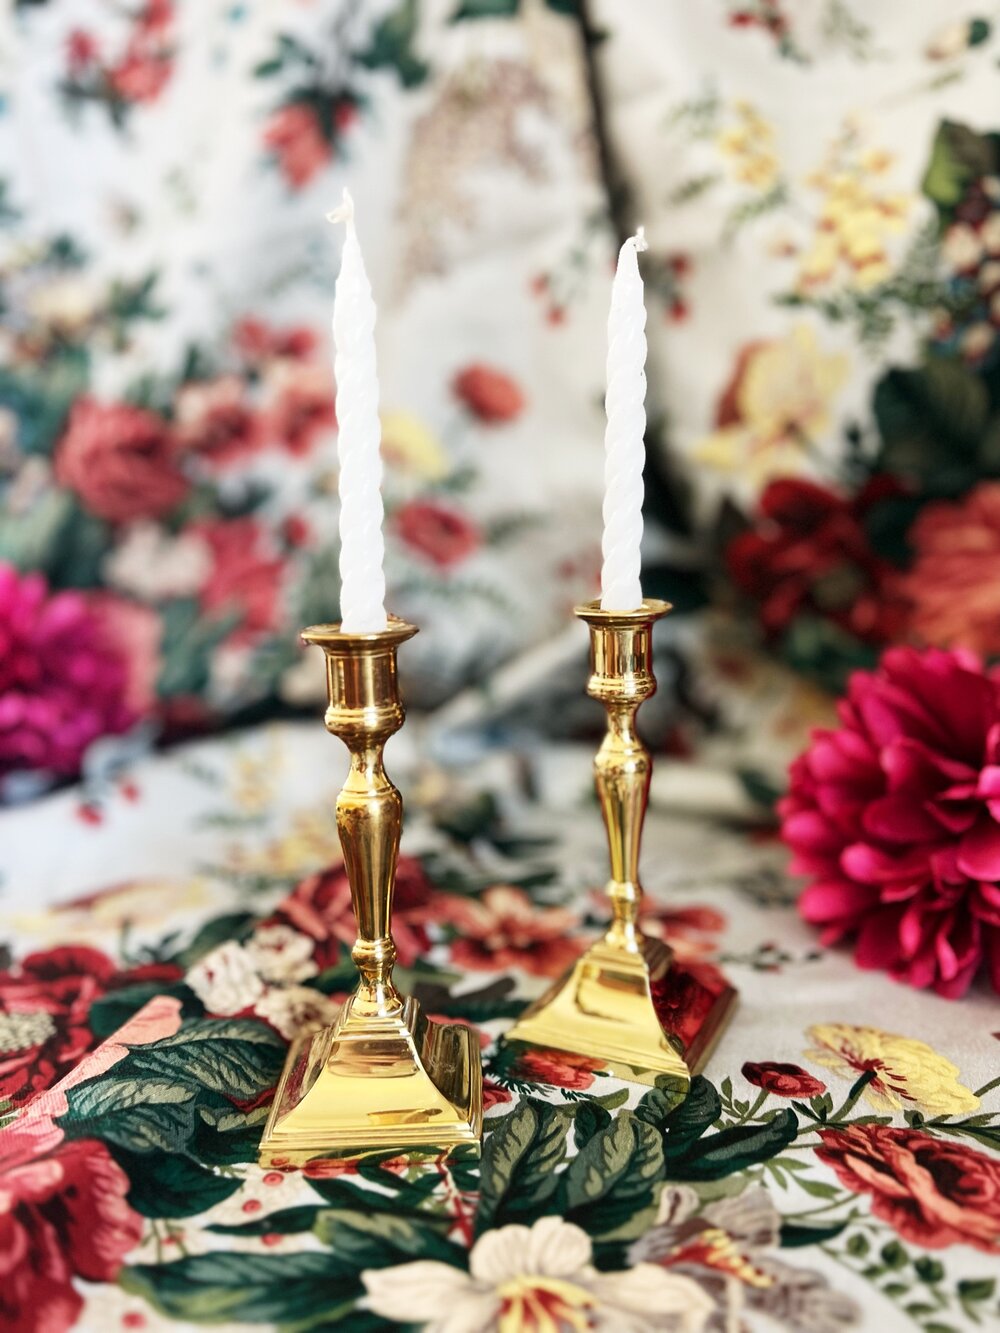 Miniature Brass Candlesticks for Dollhouses [MJD 3242]